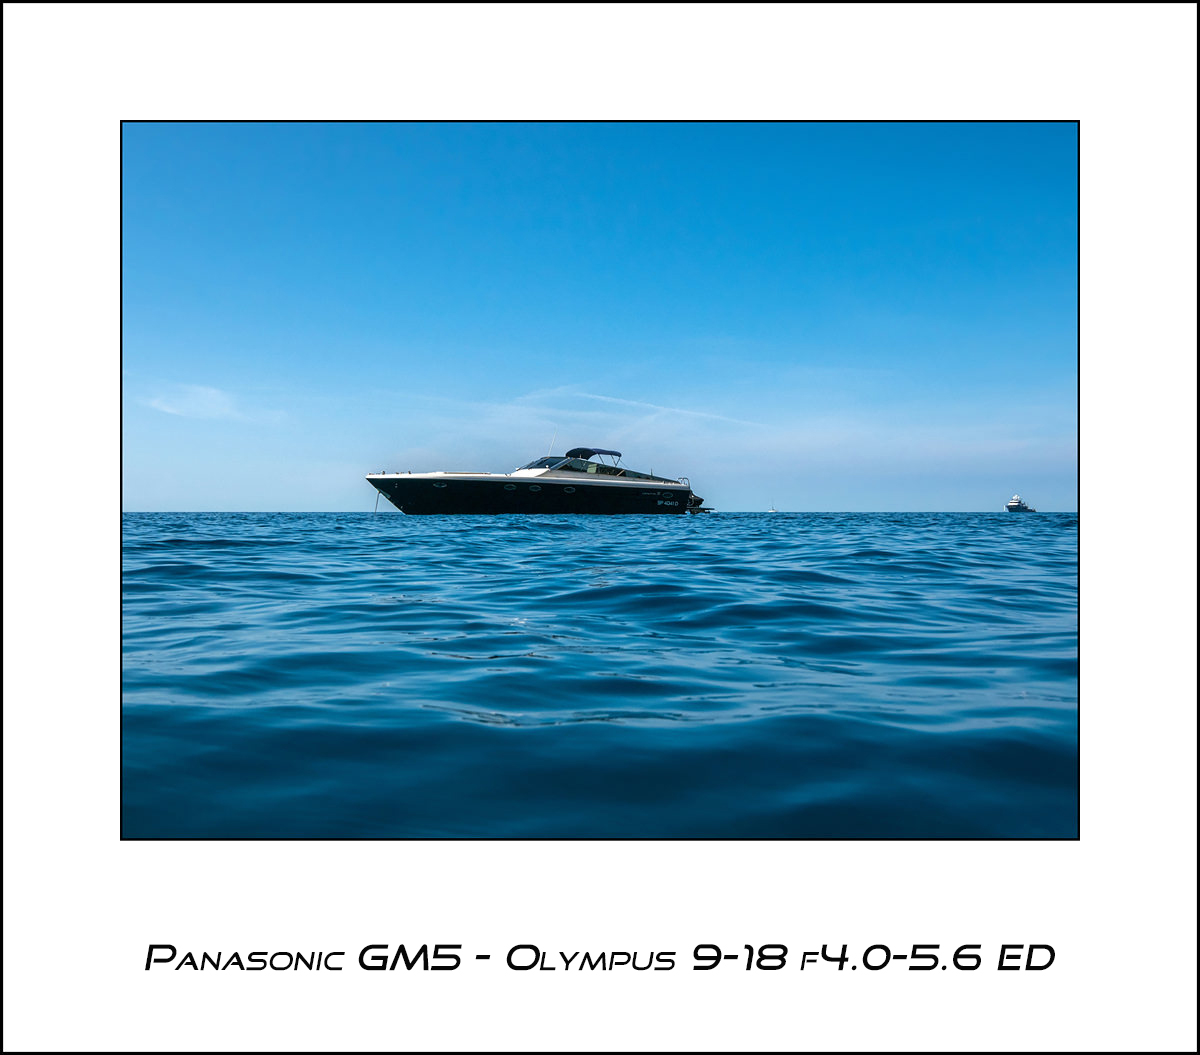 Panasonic GM5 - Olympus 9-18 f4.0-5.6 ED